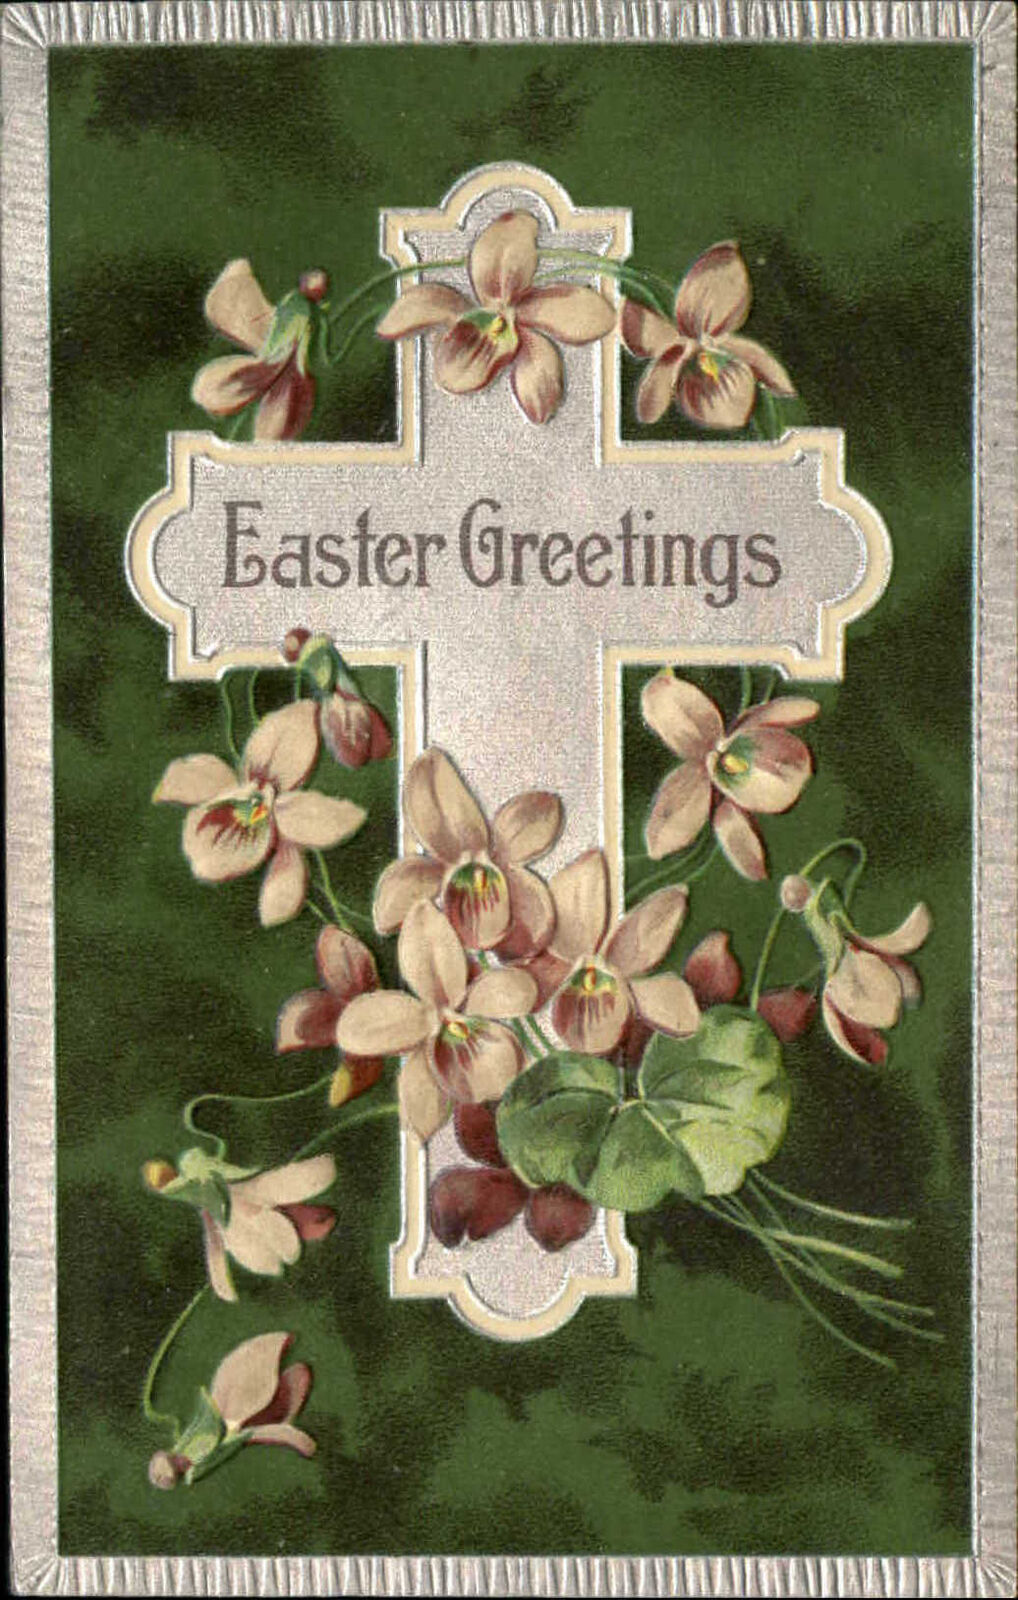 Easter Greetings silver gilt cross lavender flowers PFB c1905